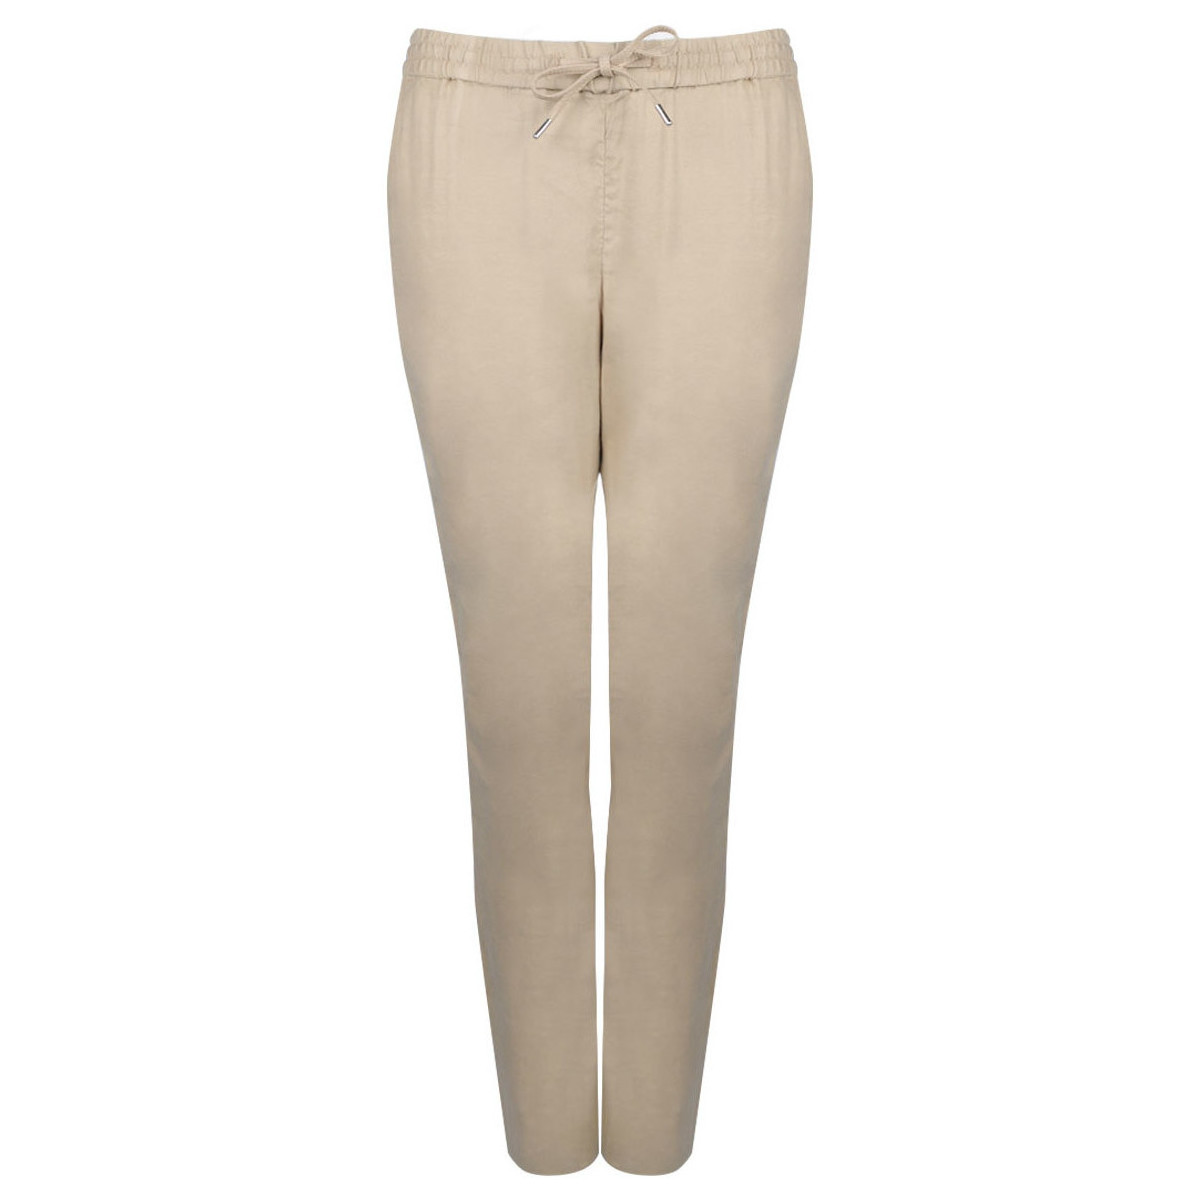 Vêtements Femme Pantalons Gant 4150076 / Summer Linen Beige